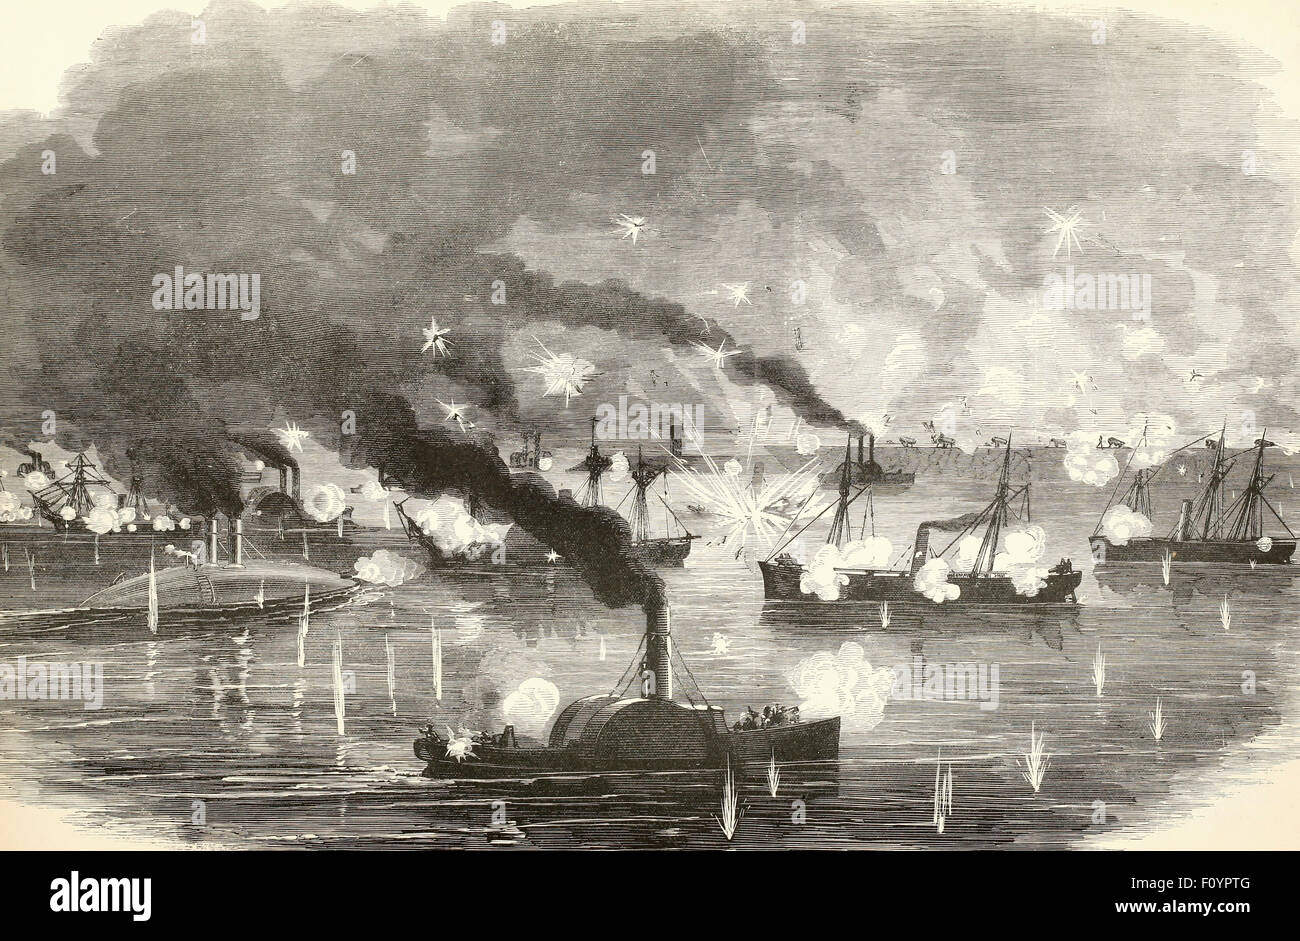 Die große Seeschlacht des Mississippi - Passage der Second Division der Bundesrepublik Squadron vorbei Fort St. Phillip, 24. April 1863 USA Bürgerkrieg Stockfoto